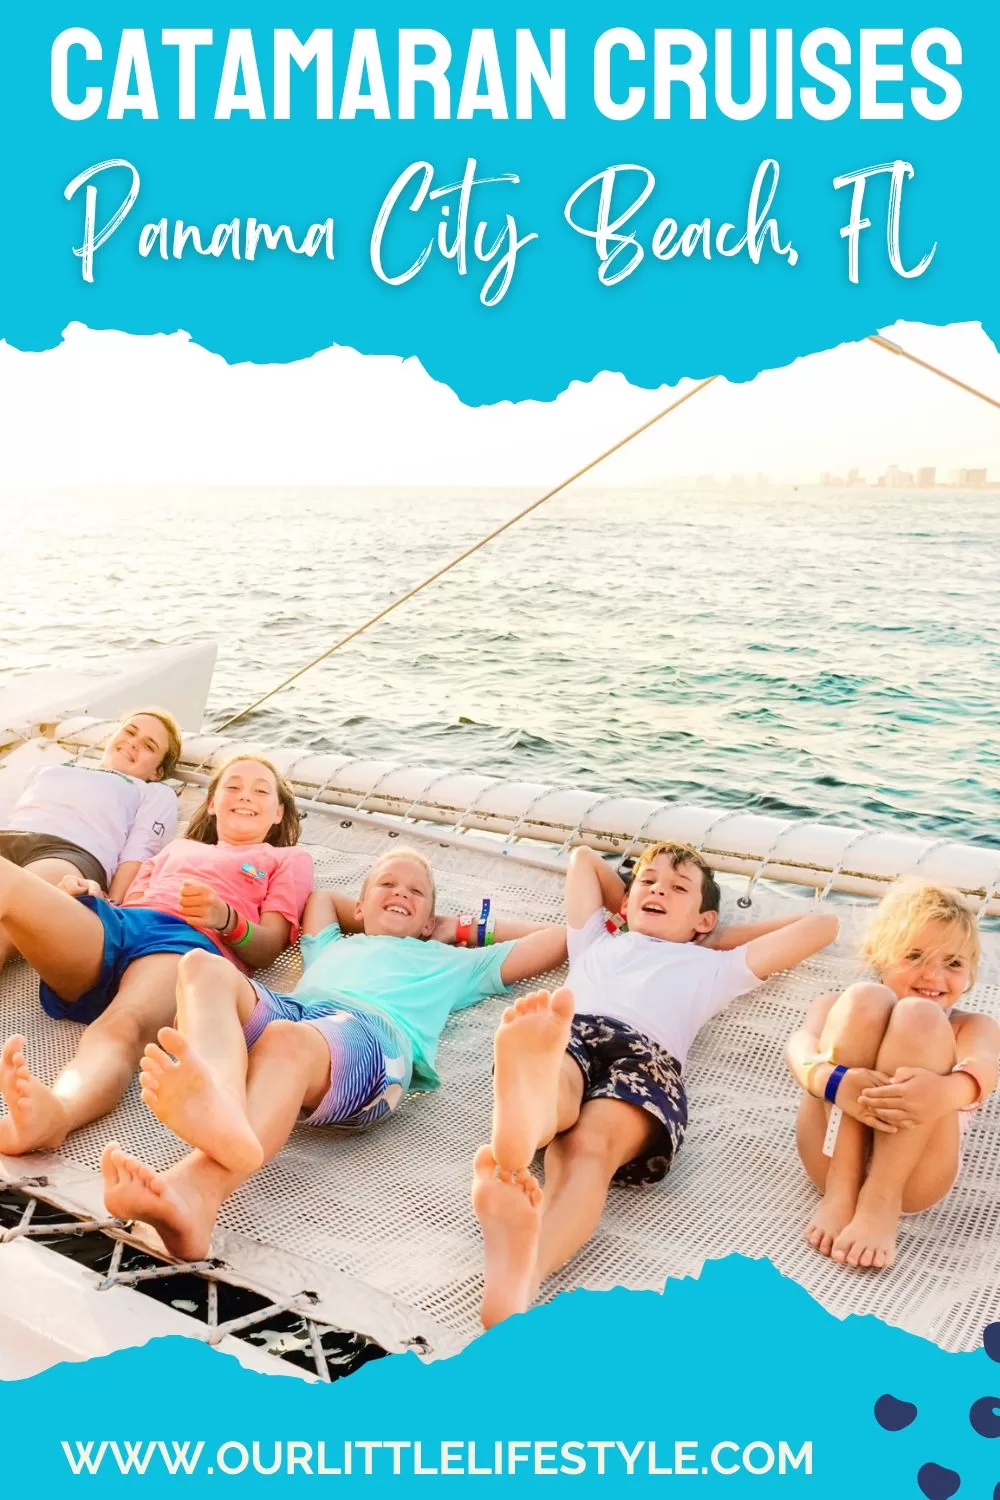 Sunset Cruises Panama City Beach. This image shows kids on a catamaran having fun